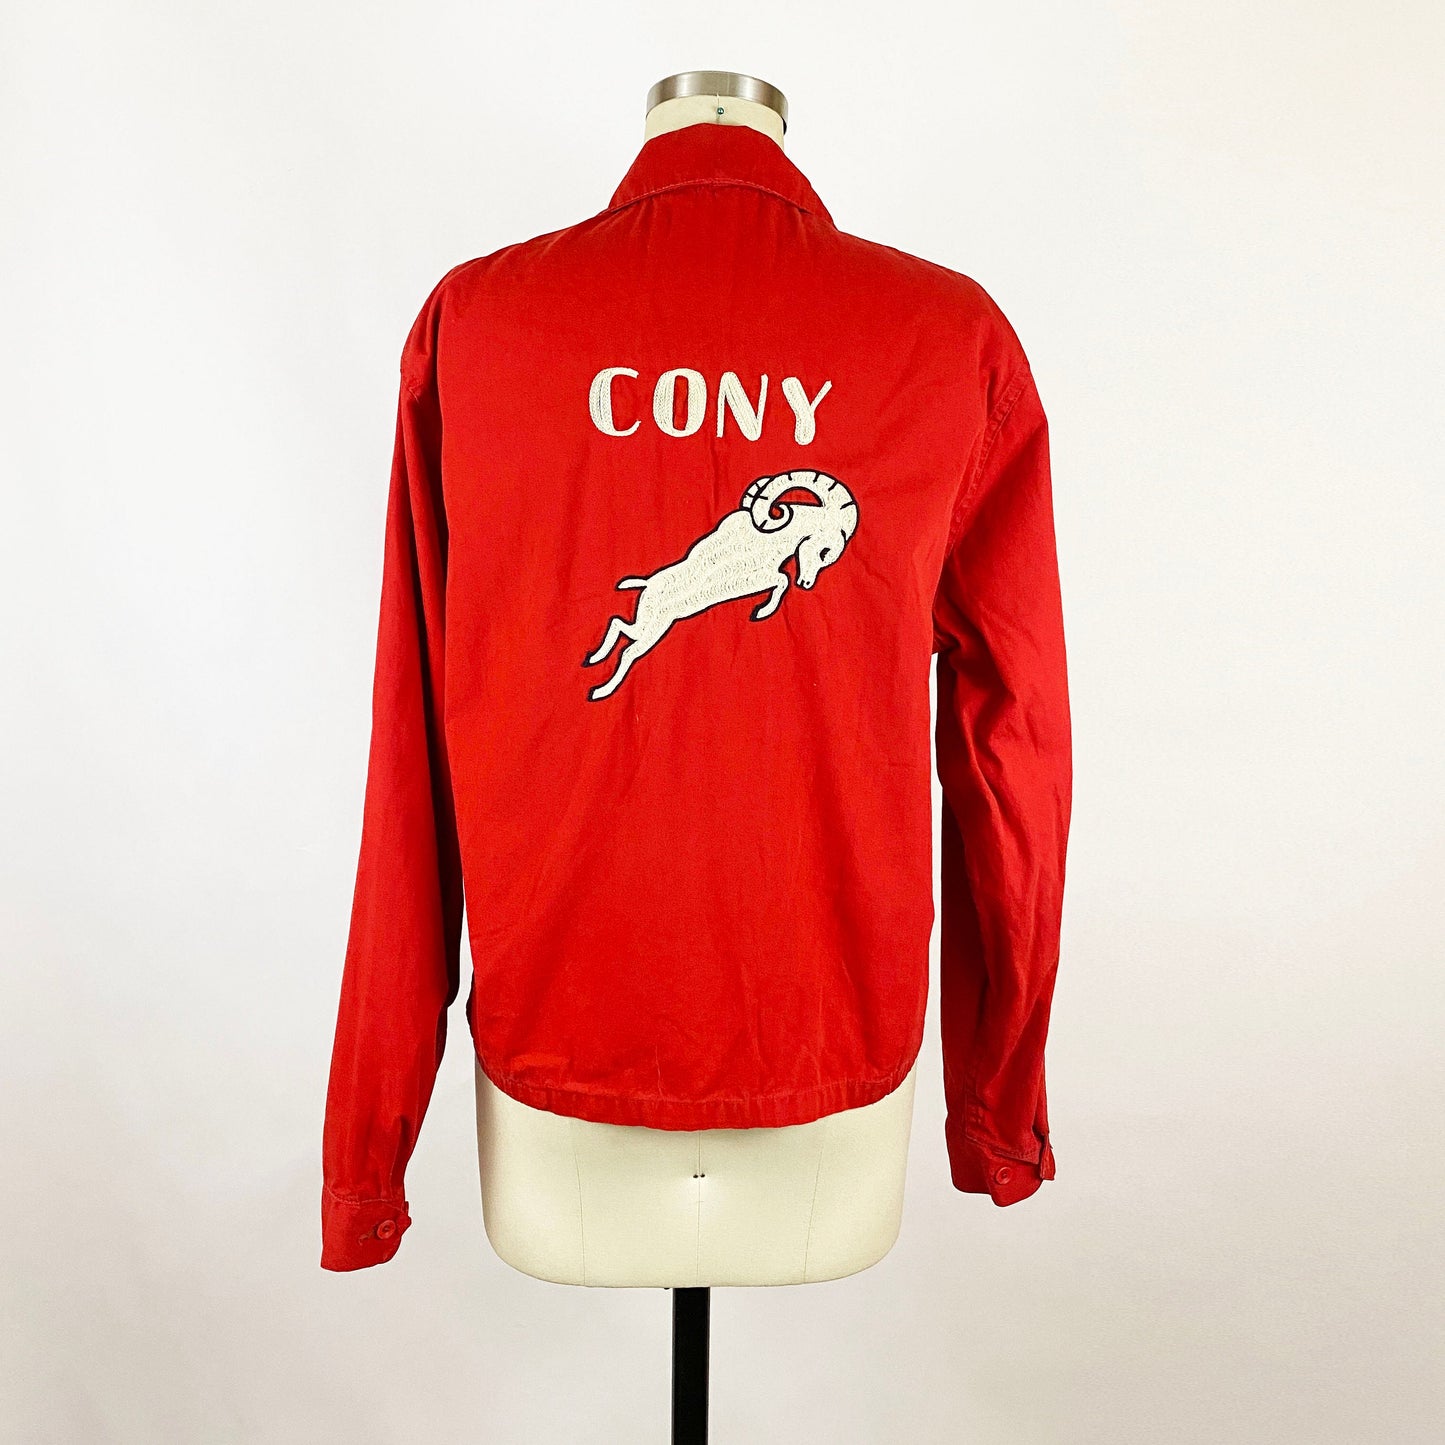 1950-1960s Red Cony Ram Chain Stitch Cotton Poplin Jacket Retro Vintage Letterman 50s Rockabilly Goat / Sir Jac / Size Large / Chest 44"